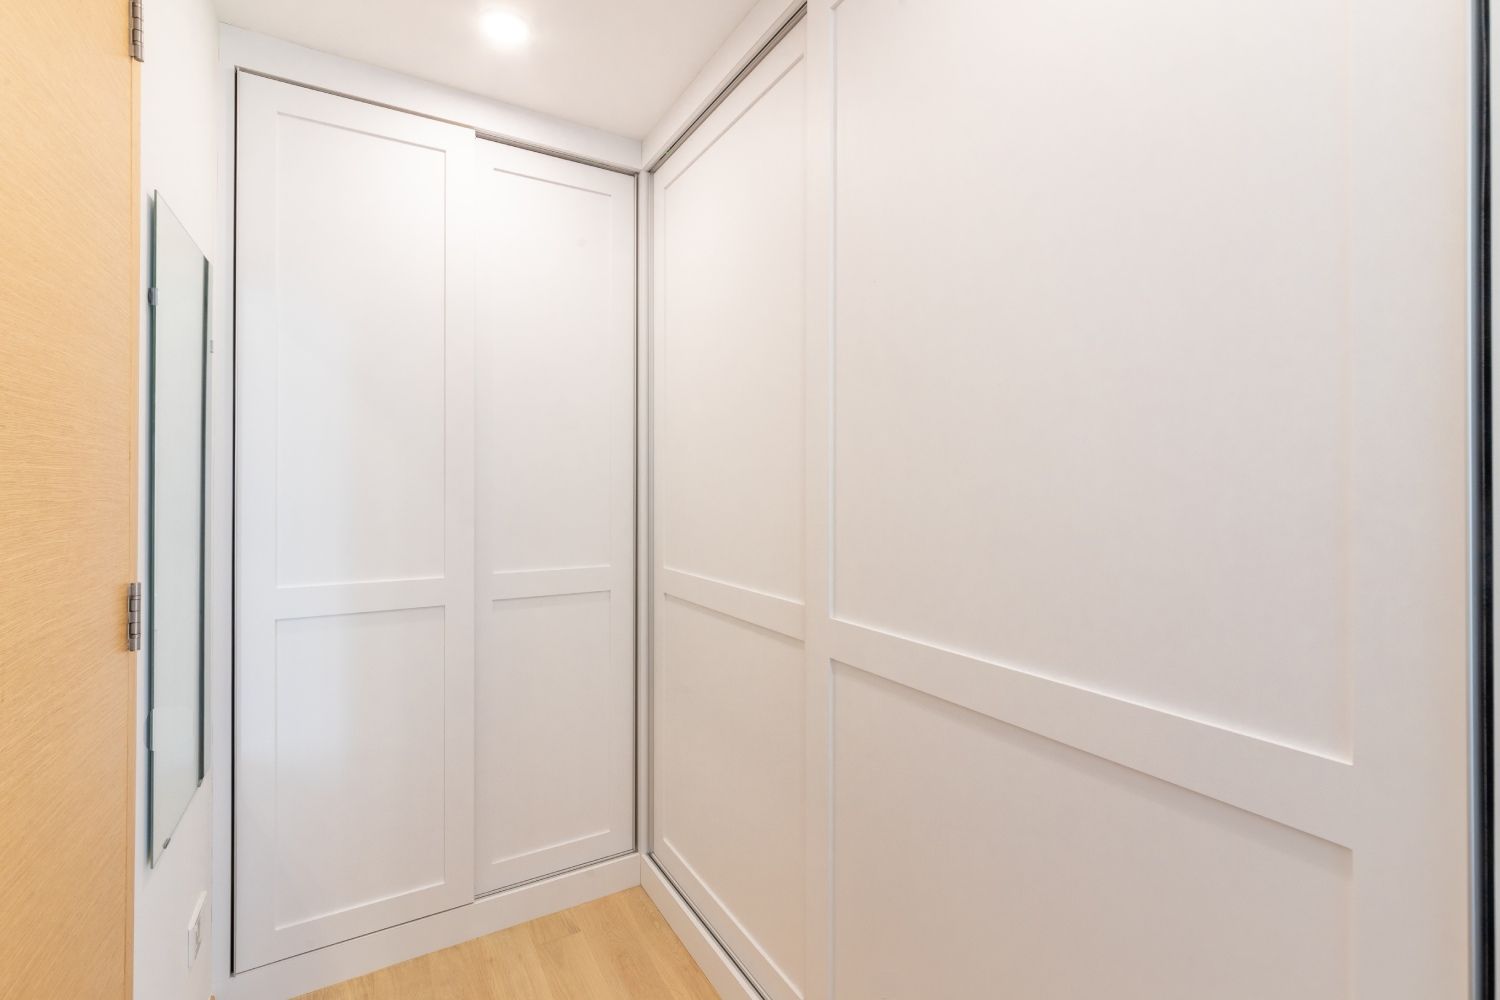 Classical 4-Door White Wardrobe Design